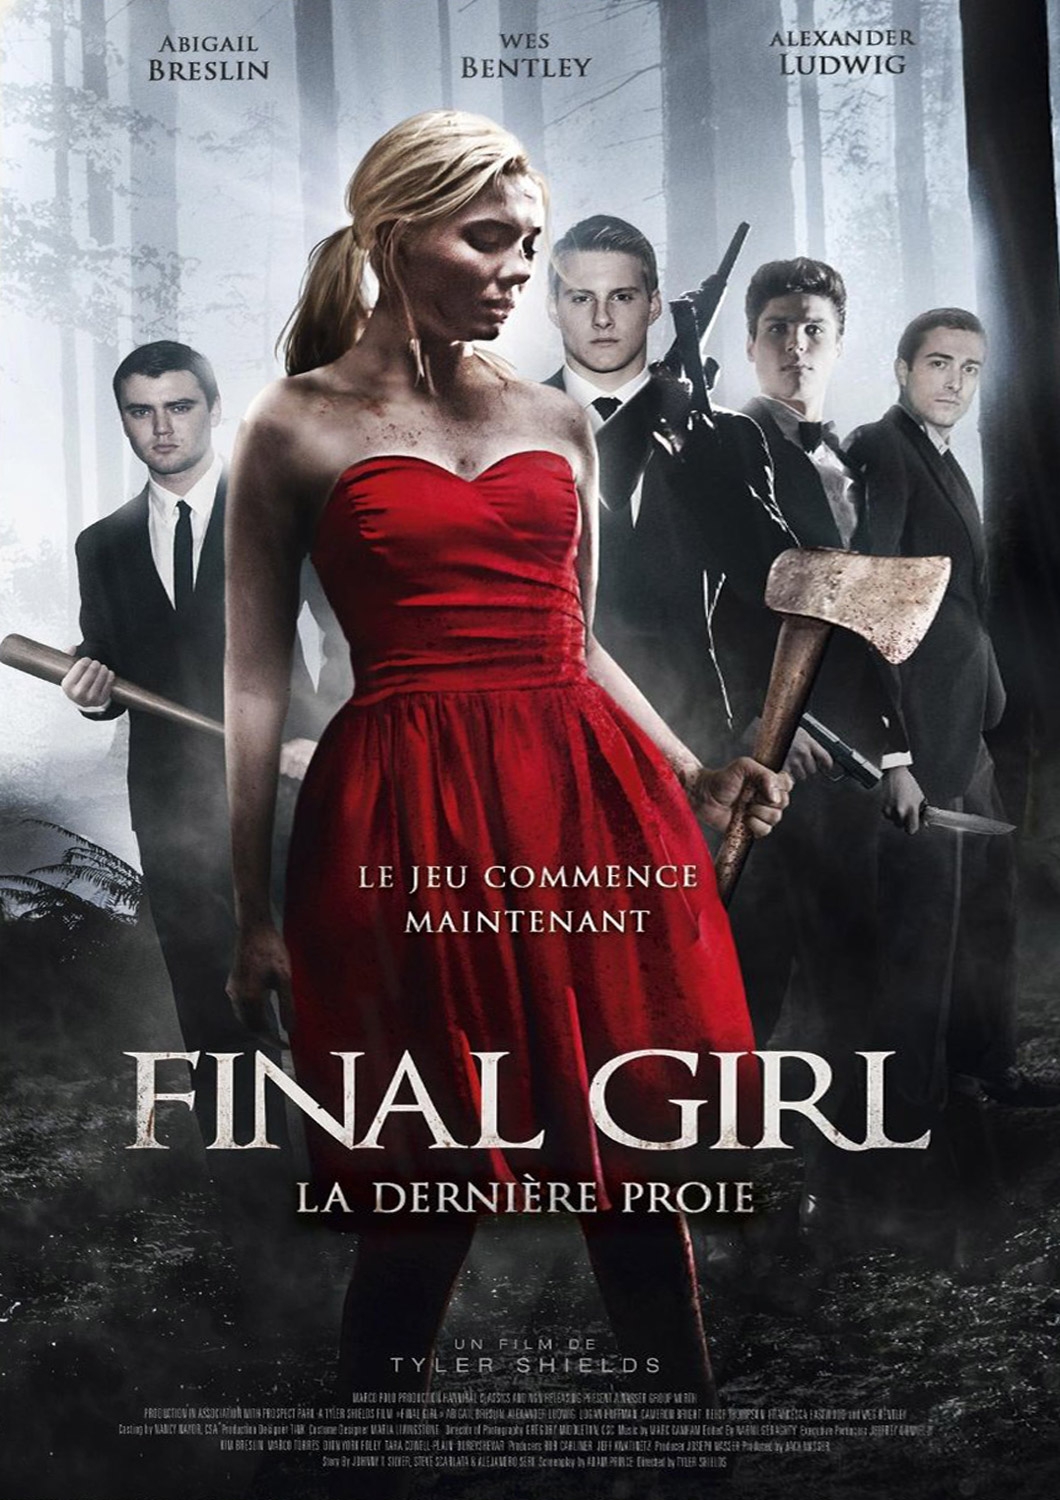 Final Girl (2015)